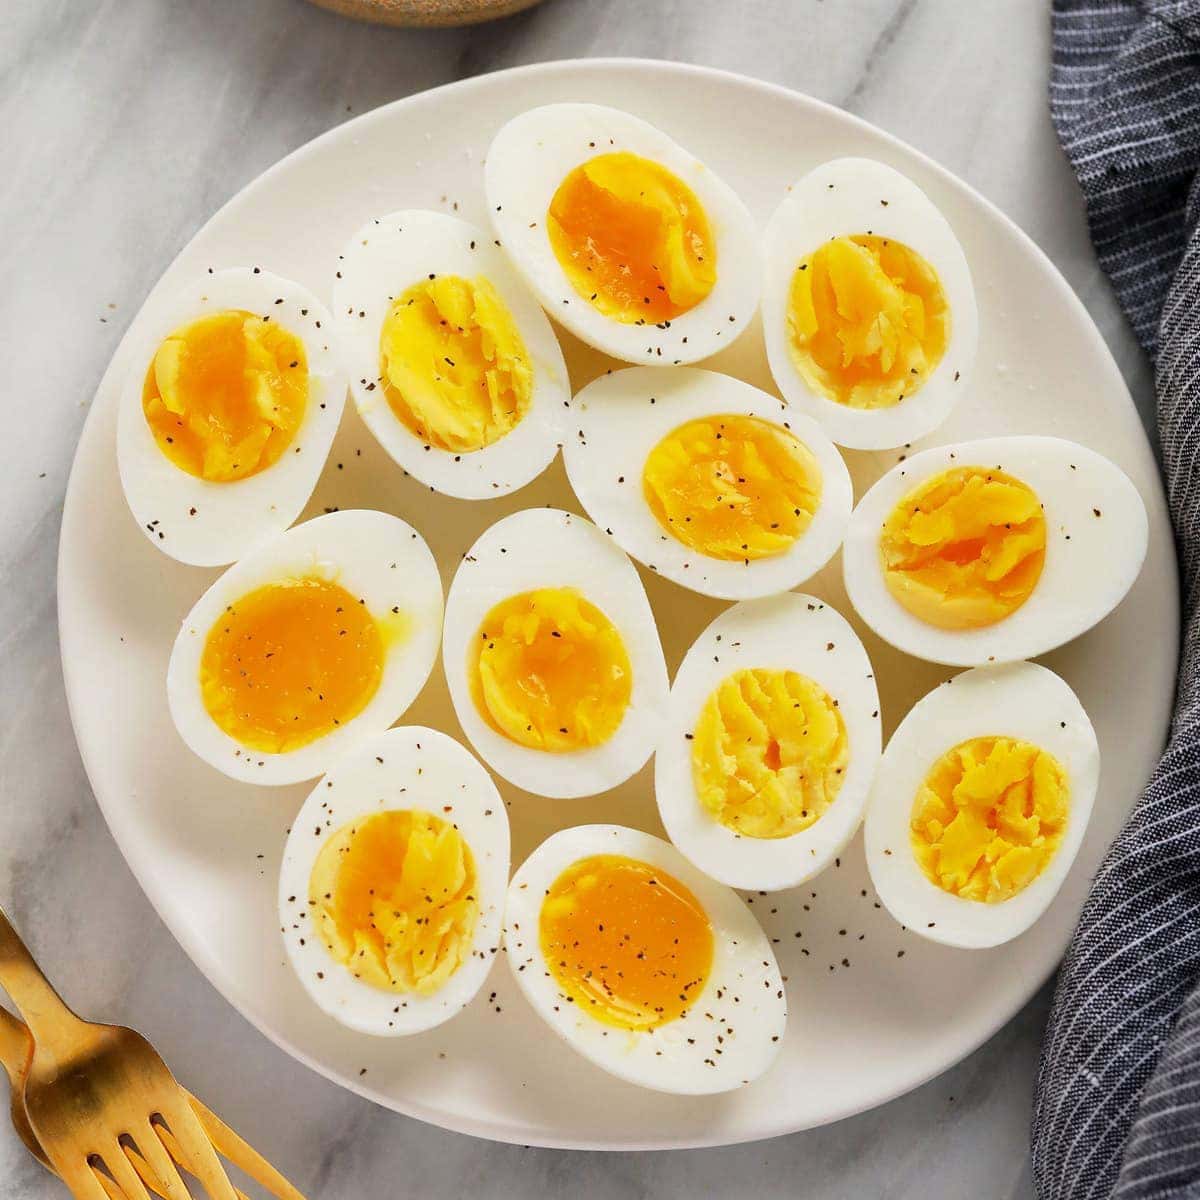 Hard Boiled Eggs - 9 CT, Fresh+